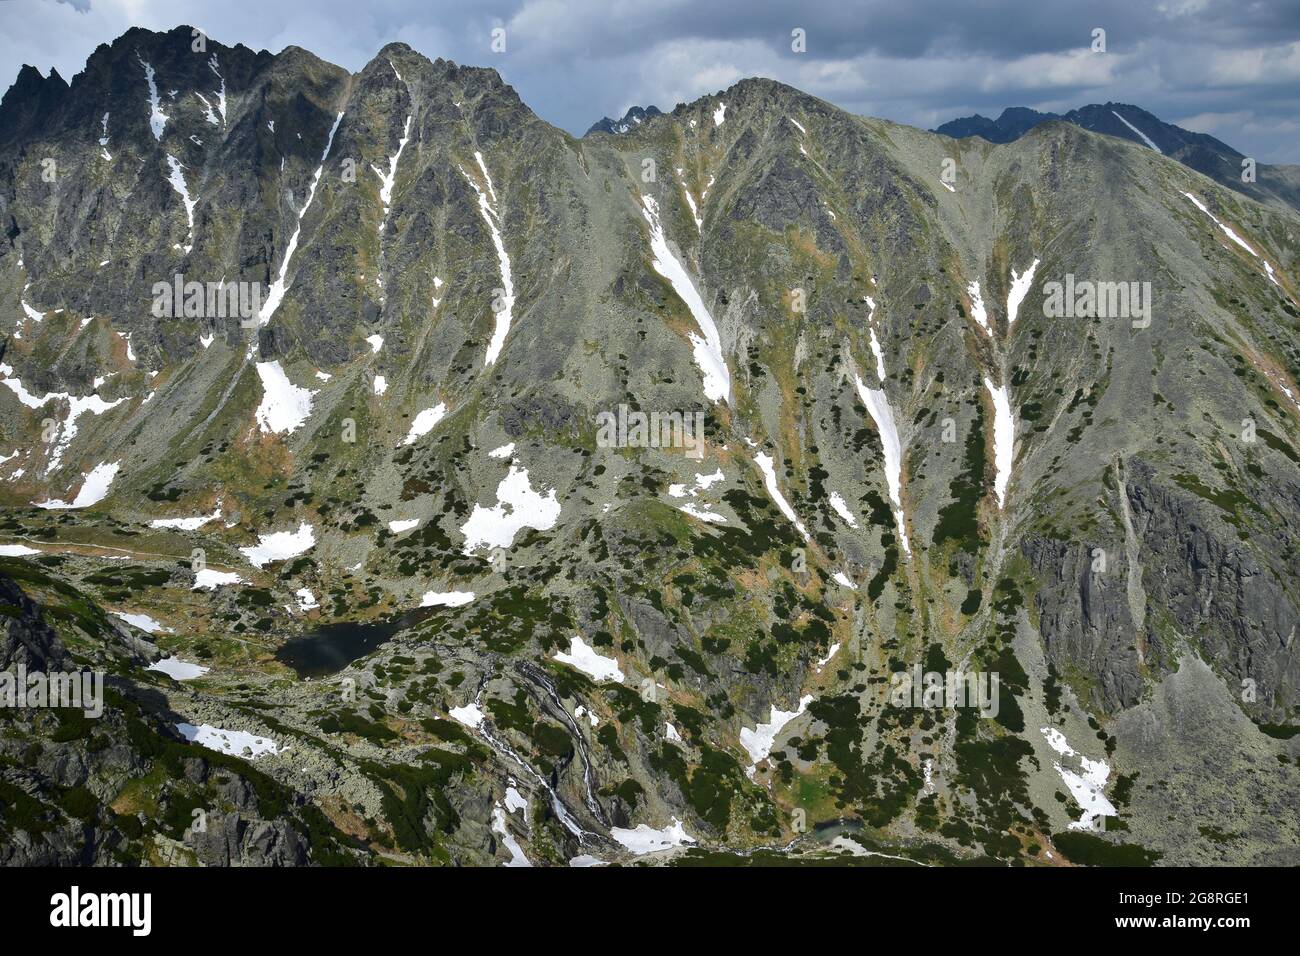 Paysage dans les Hautes Tatras avec les montagnes, la vallée Mlynicka dolina, le lac Pleso nad Skokom et la cascade Vodopad Skok. Slovaquie. Banque D'Images